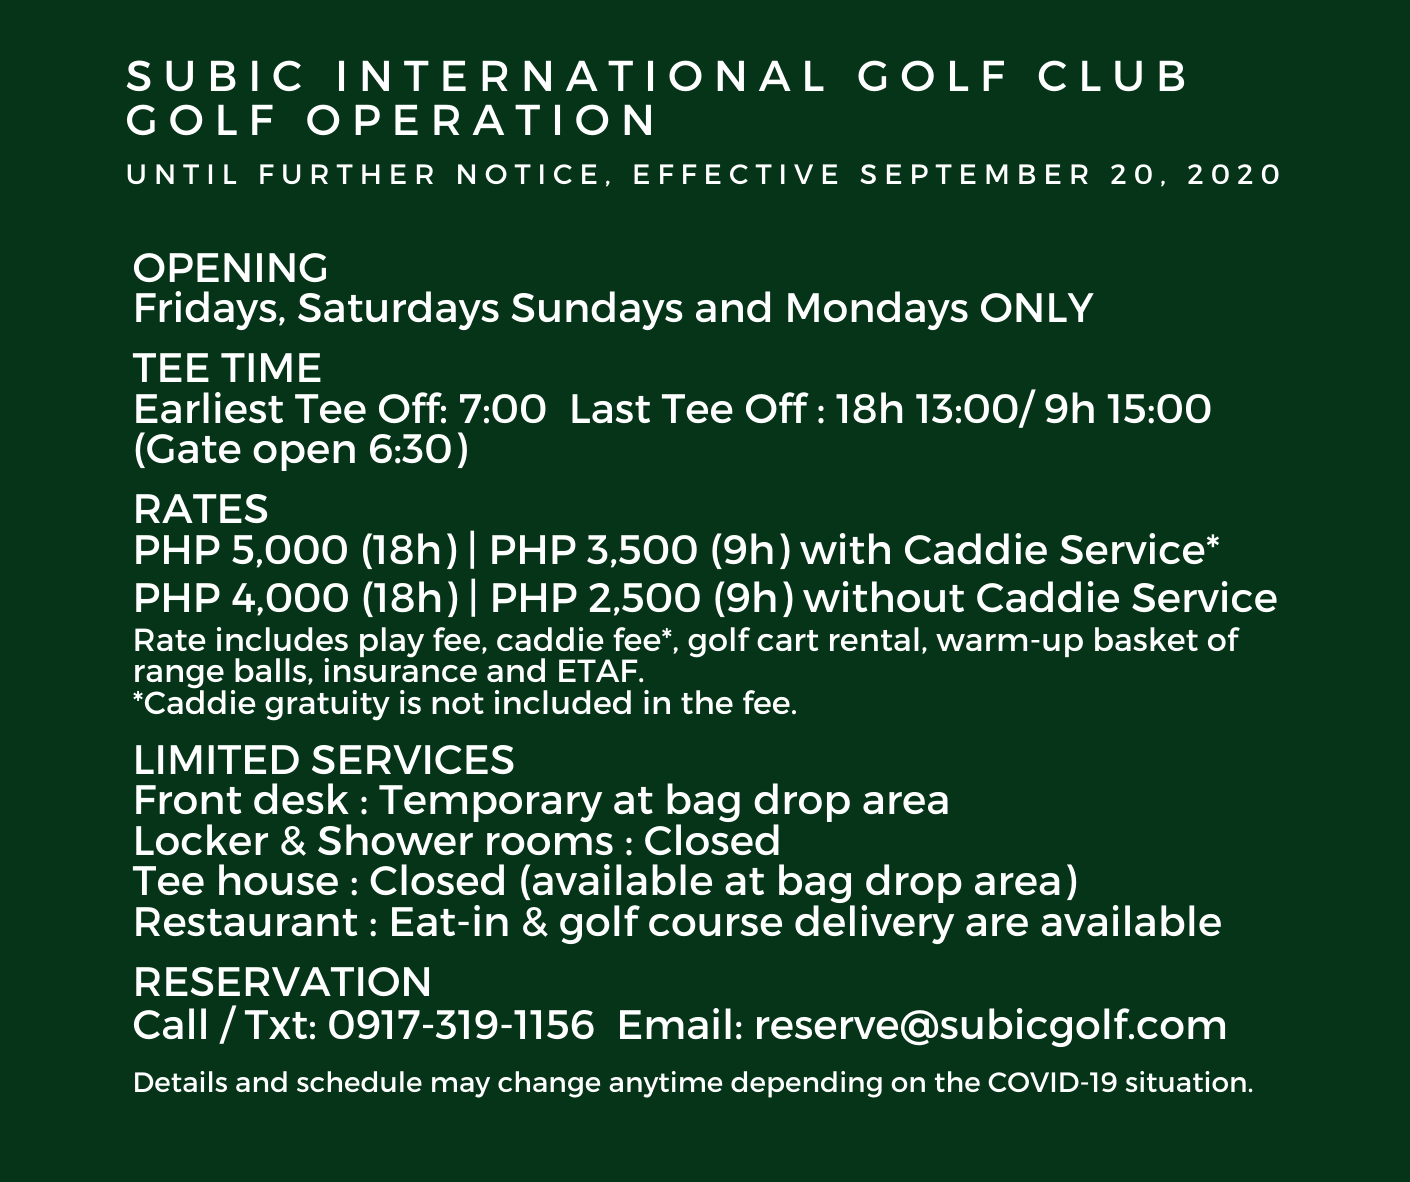 SIGC Golf Operation Update Effective September 20th